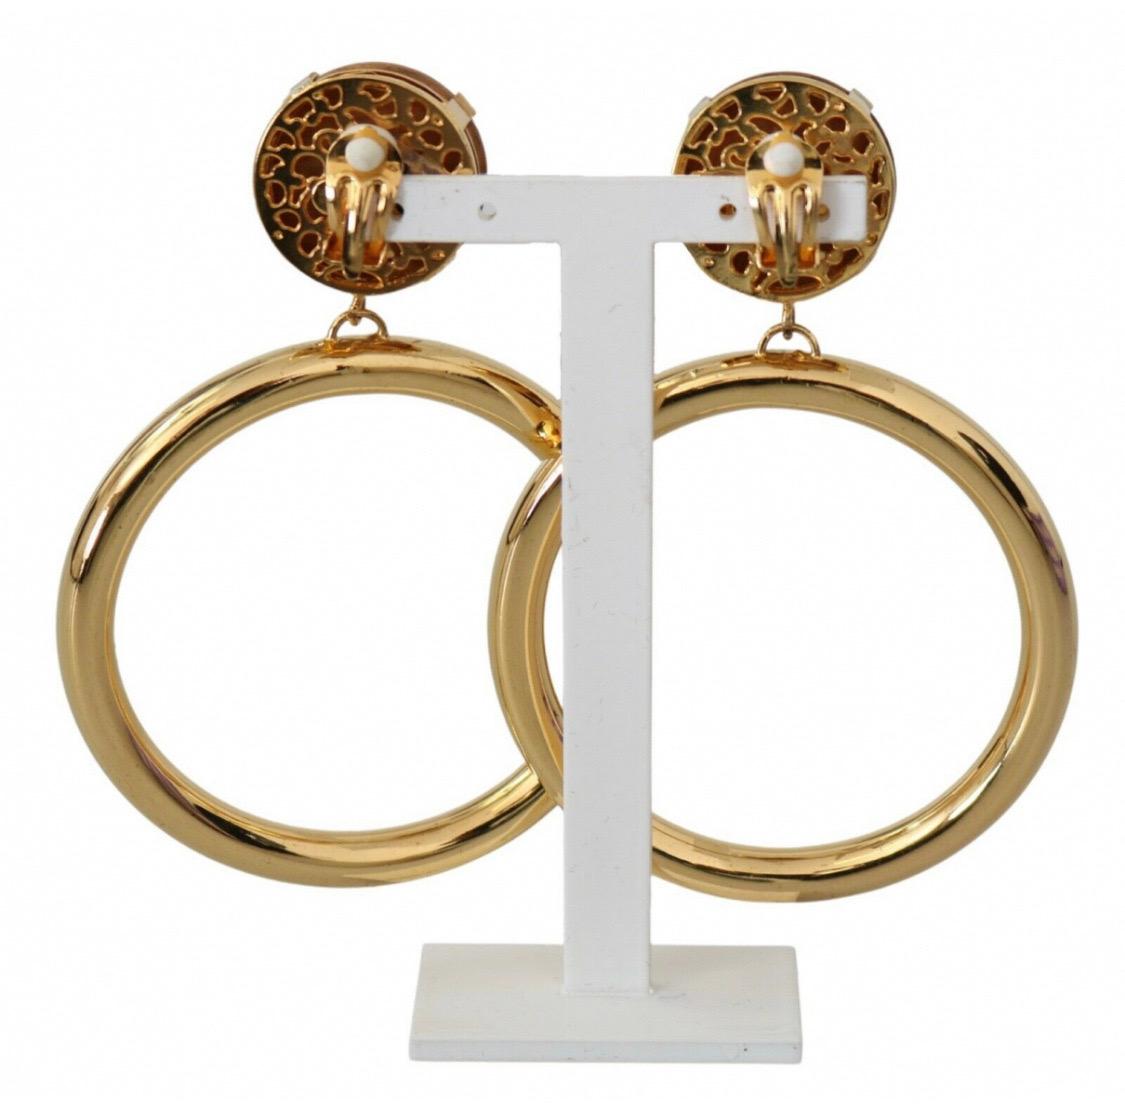 Modern Dolce & Gabbana Gold Metal Bras Hoop Earrings With Wooden Clip On DG Logo